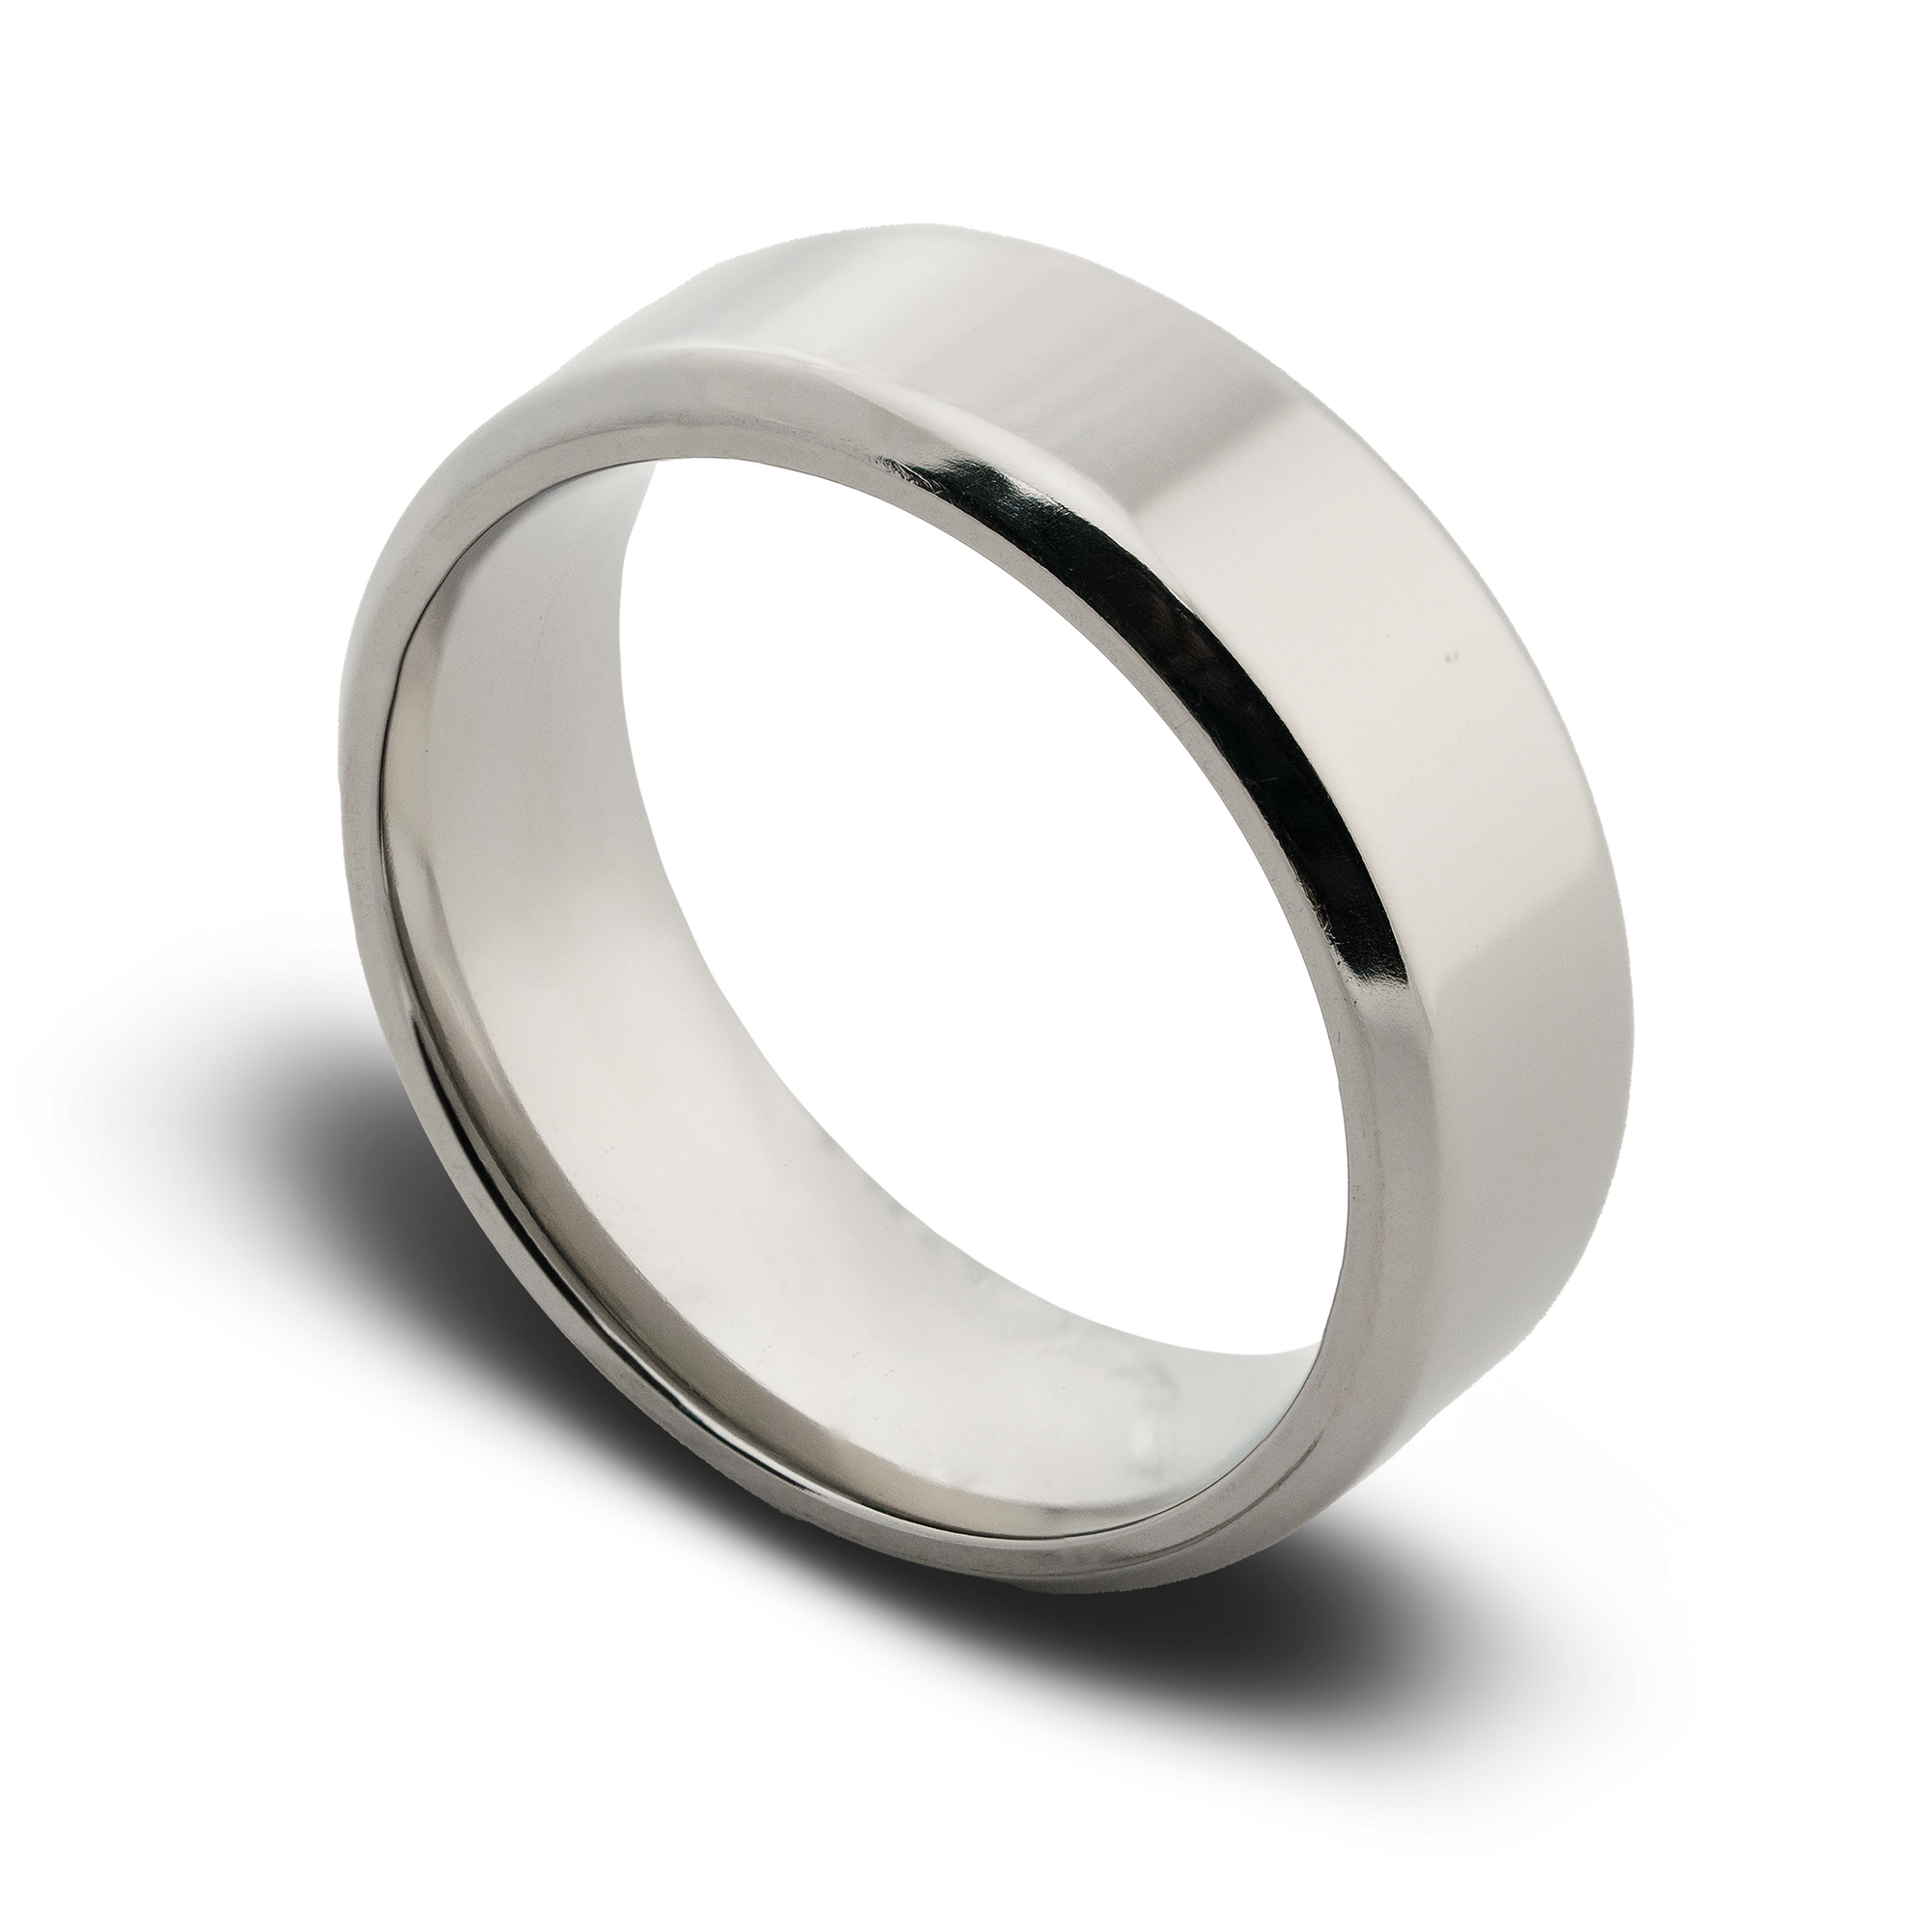 NEW: The “Titan” Ring